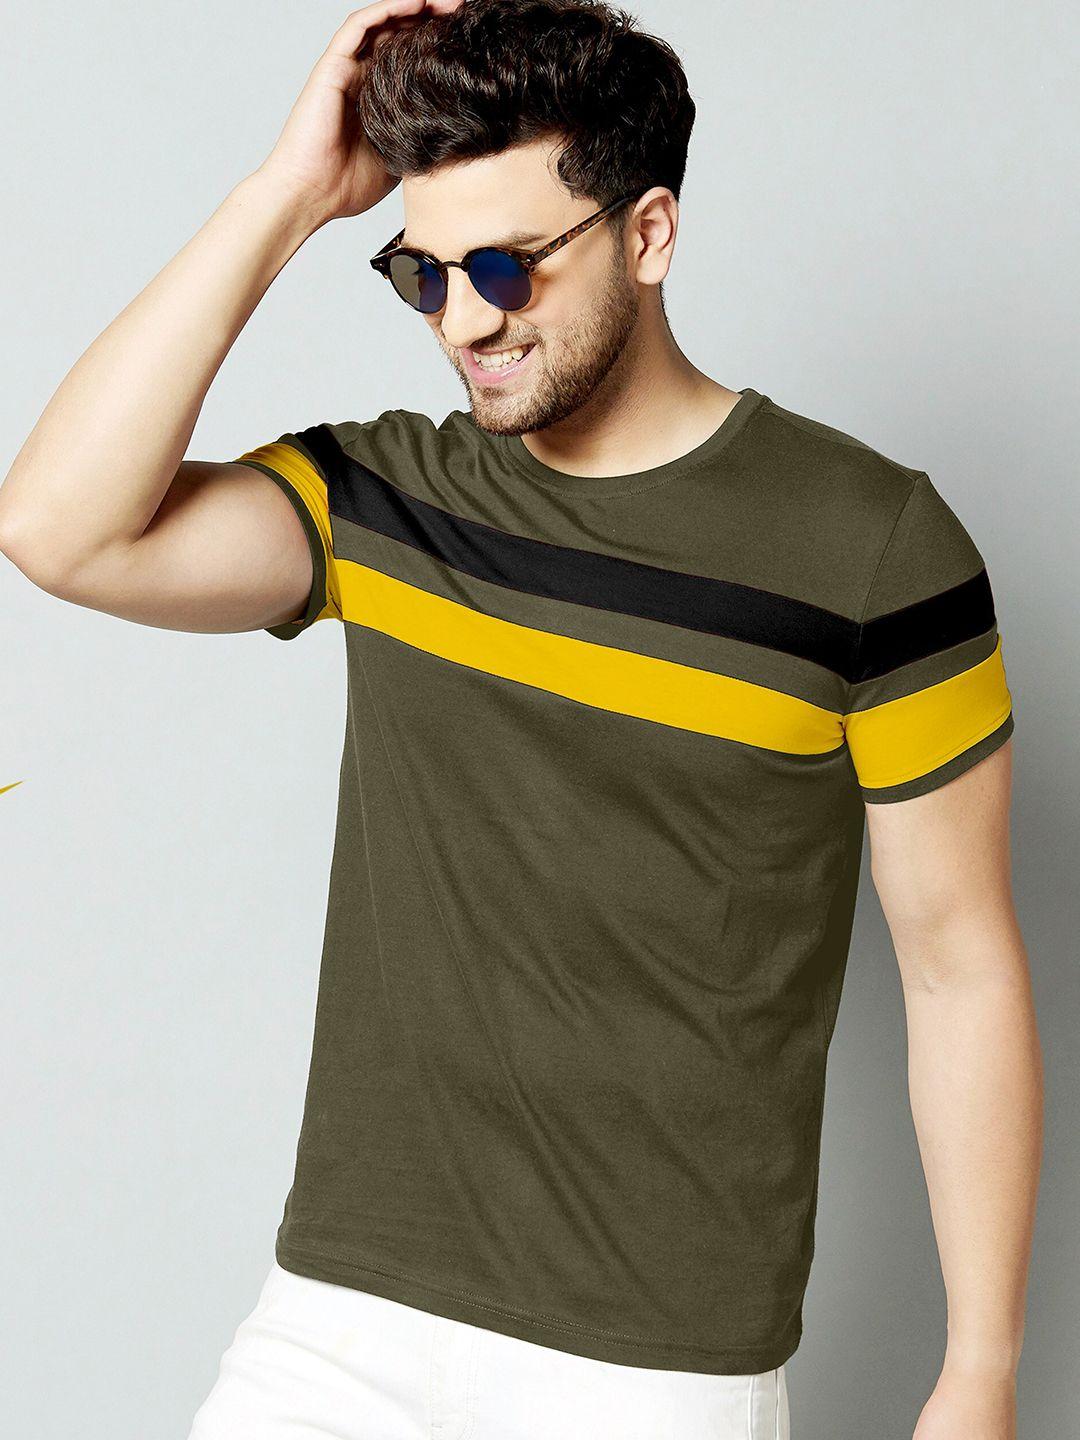 ausk men olive green & yellow colourblocked cotton t-shirt